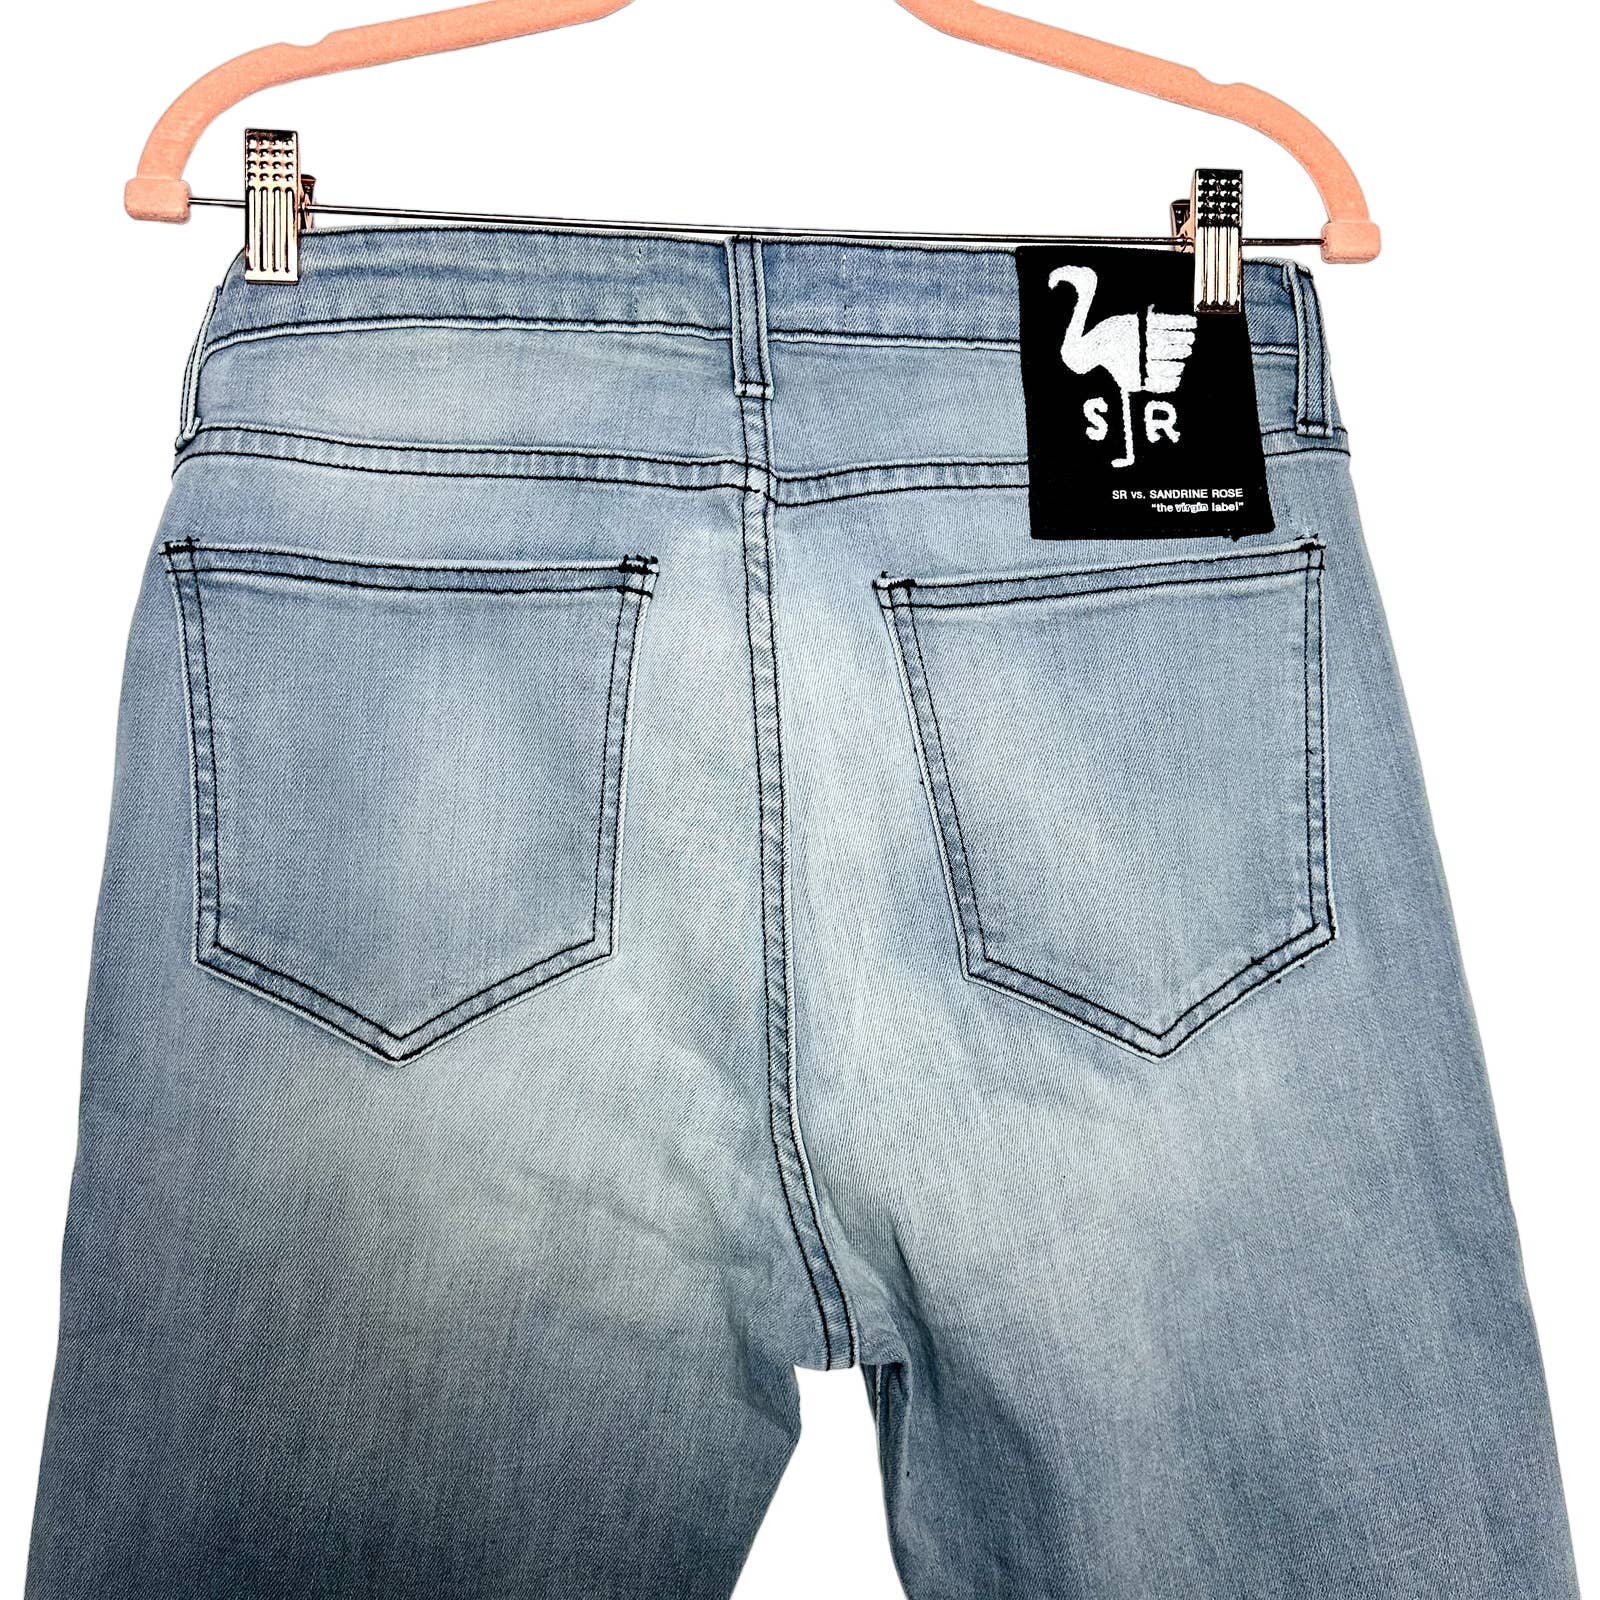 Free People X Sandrine Rose NWT Mid-Rise Skinny Distressed Jeans Blue Size 31